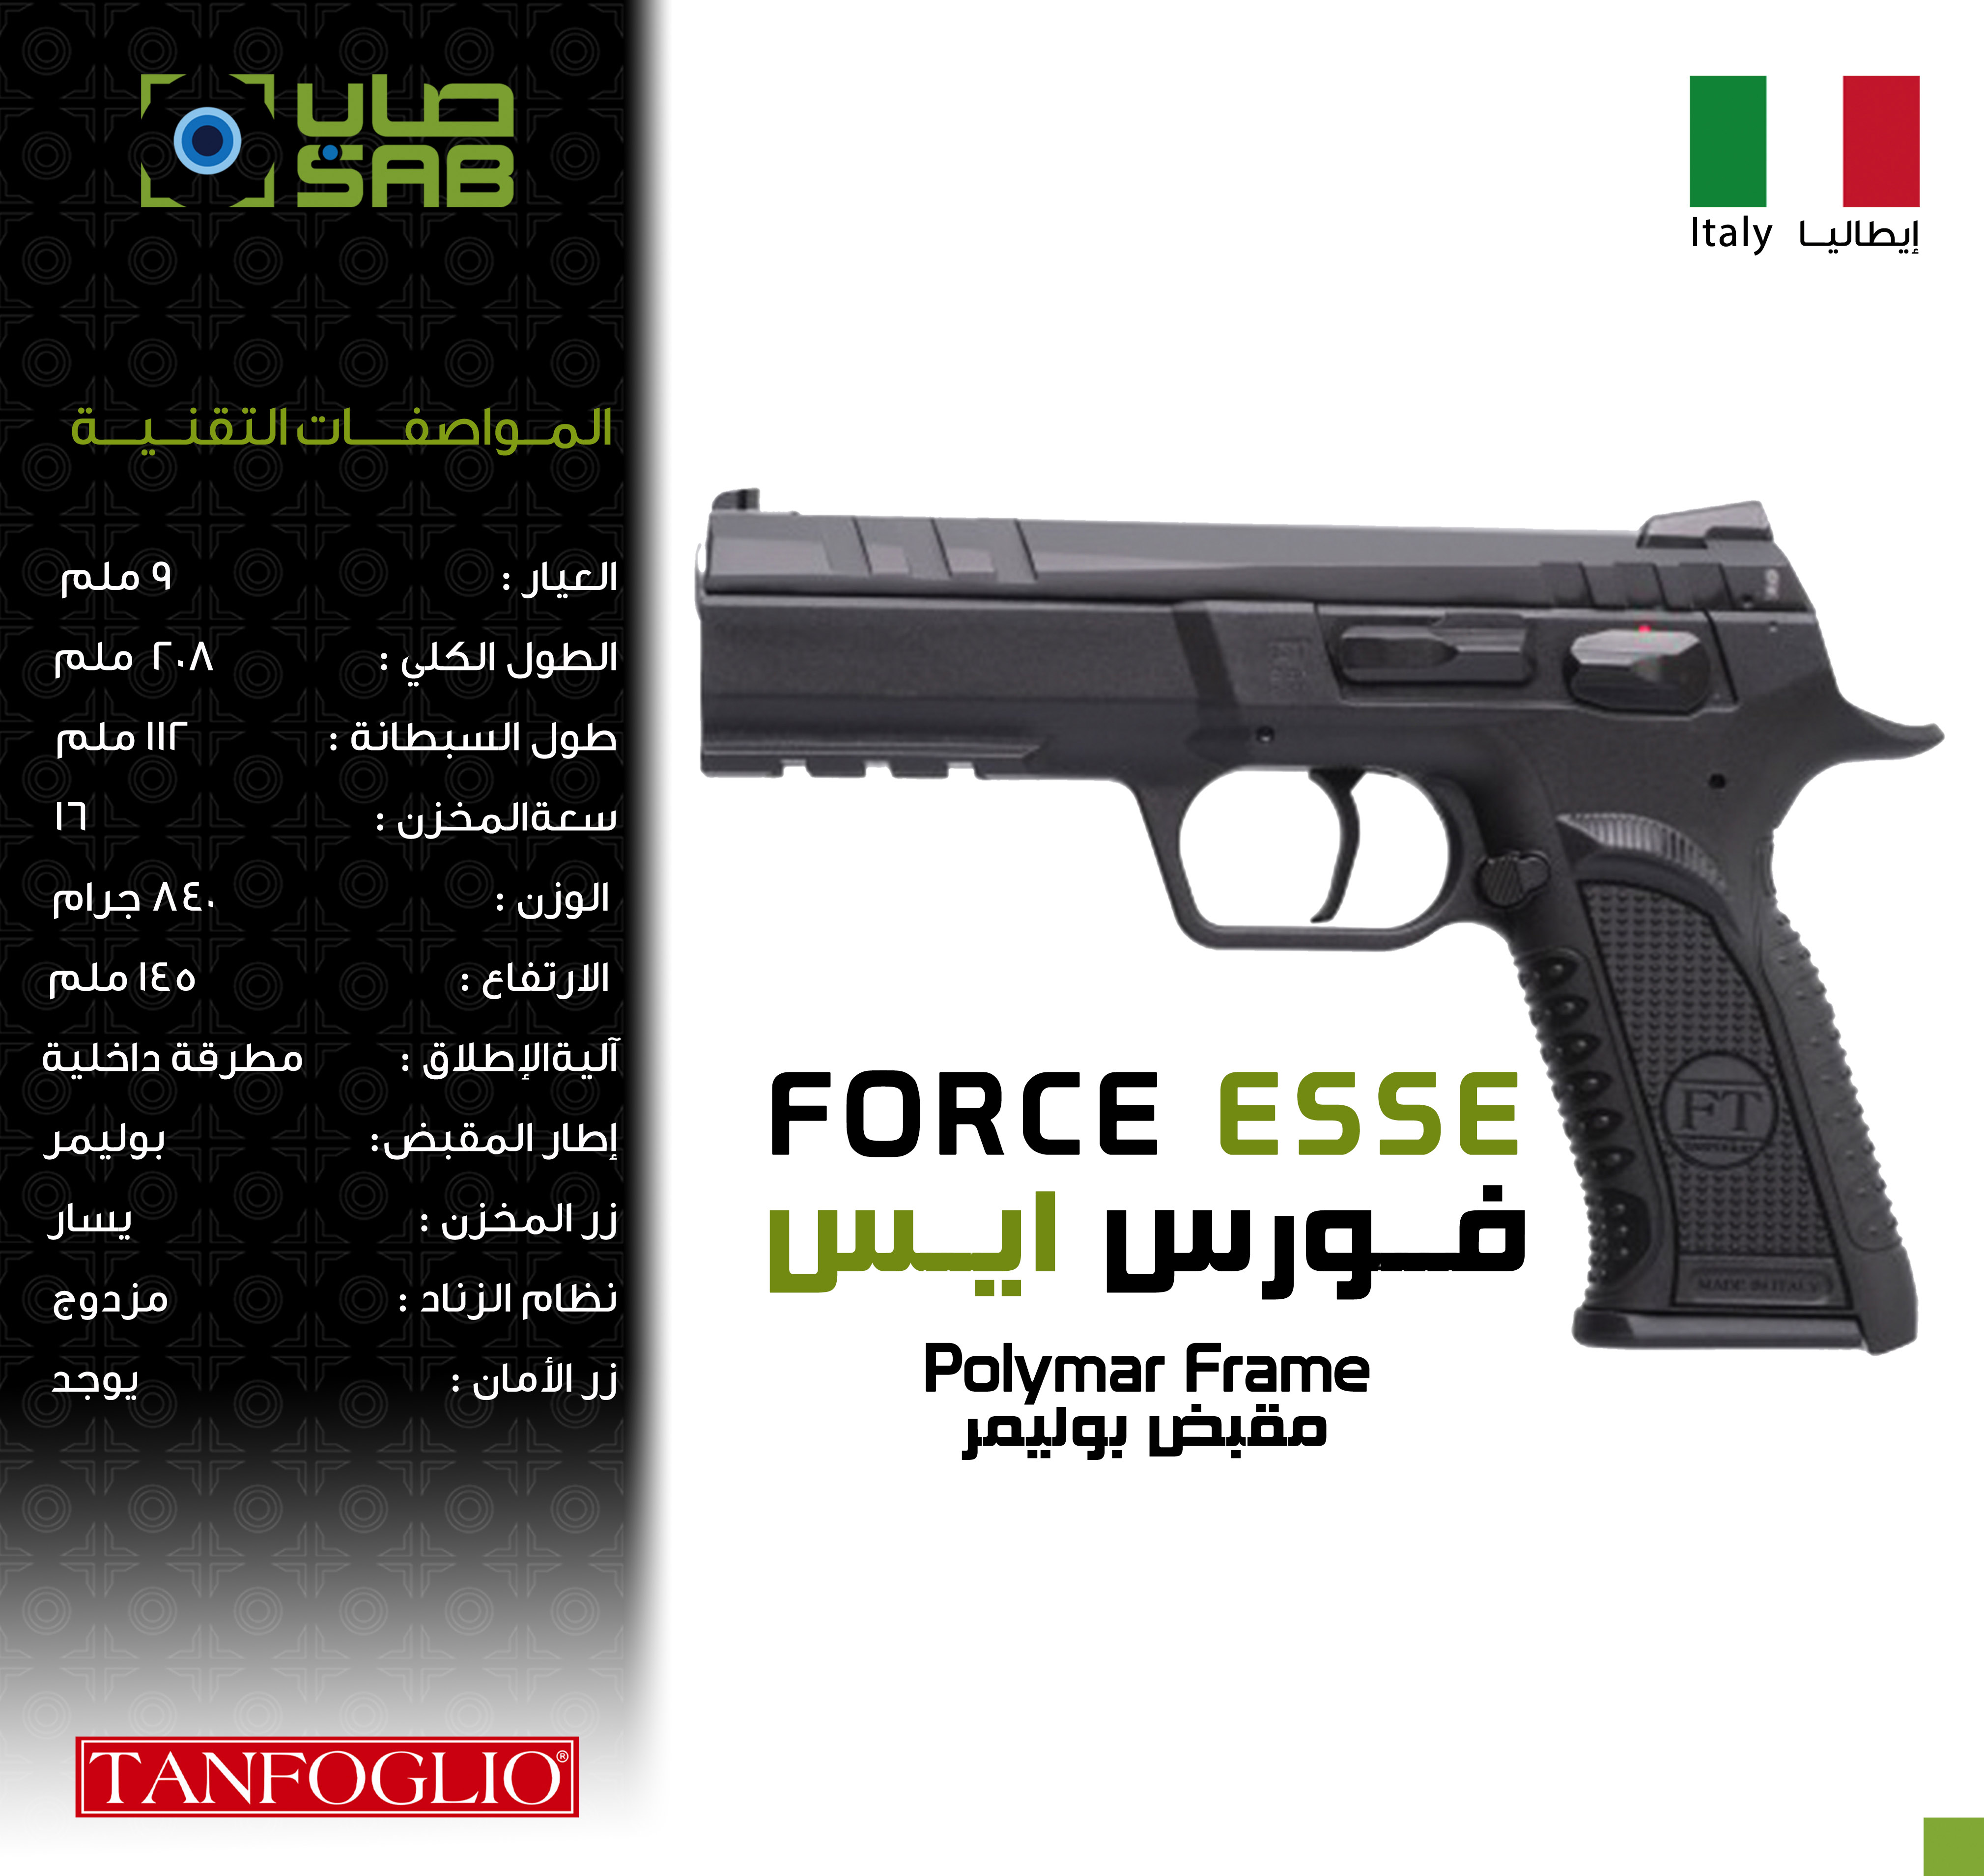 9mm - Tanfoglio - FORCE ESSE